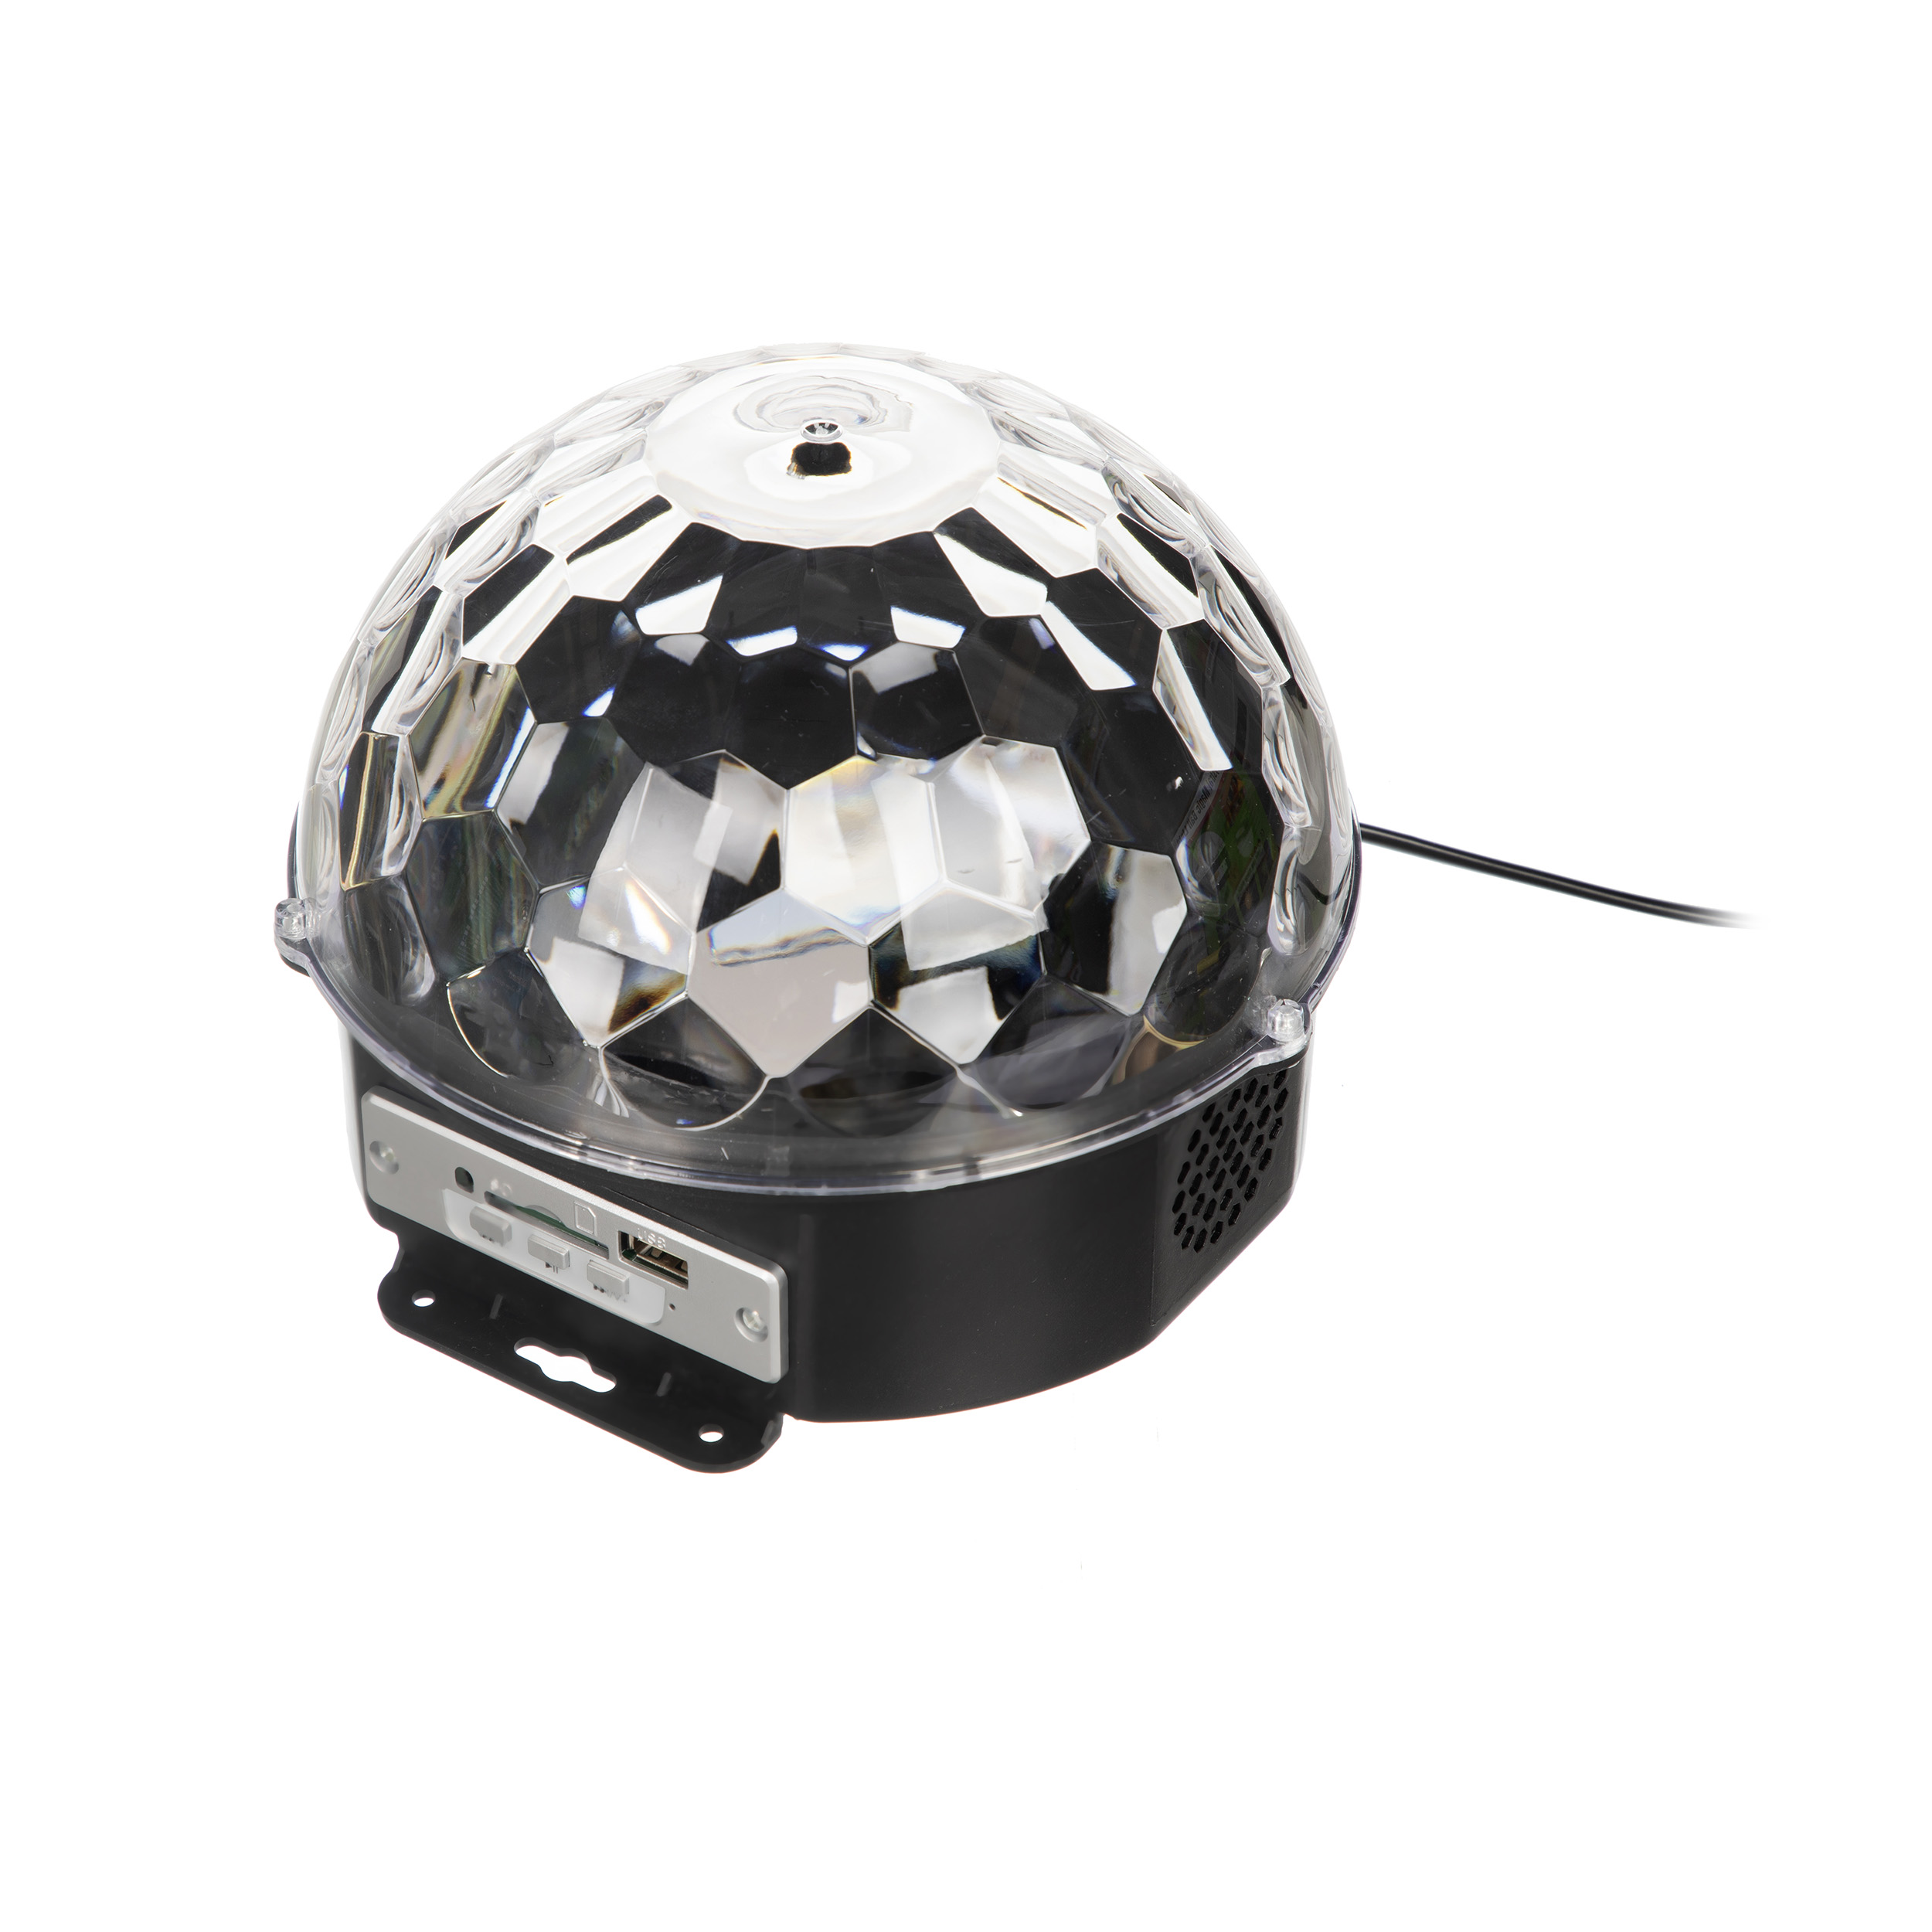 اسپیکر و رقص نور مدل LED Crystral Magic Ball Light